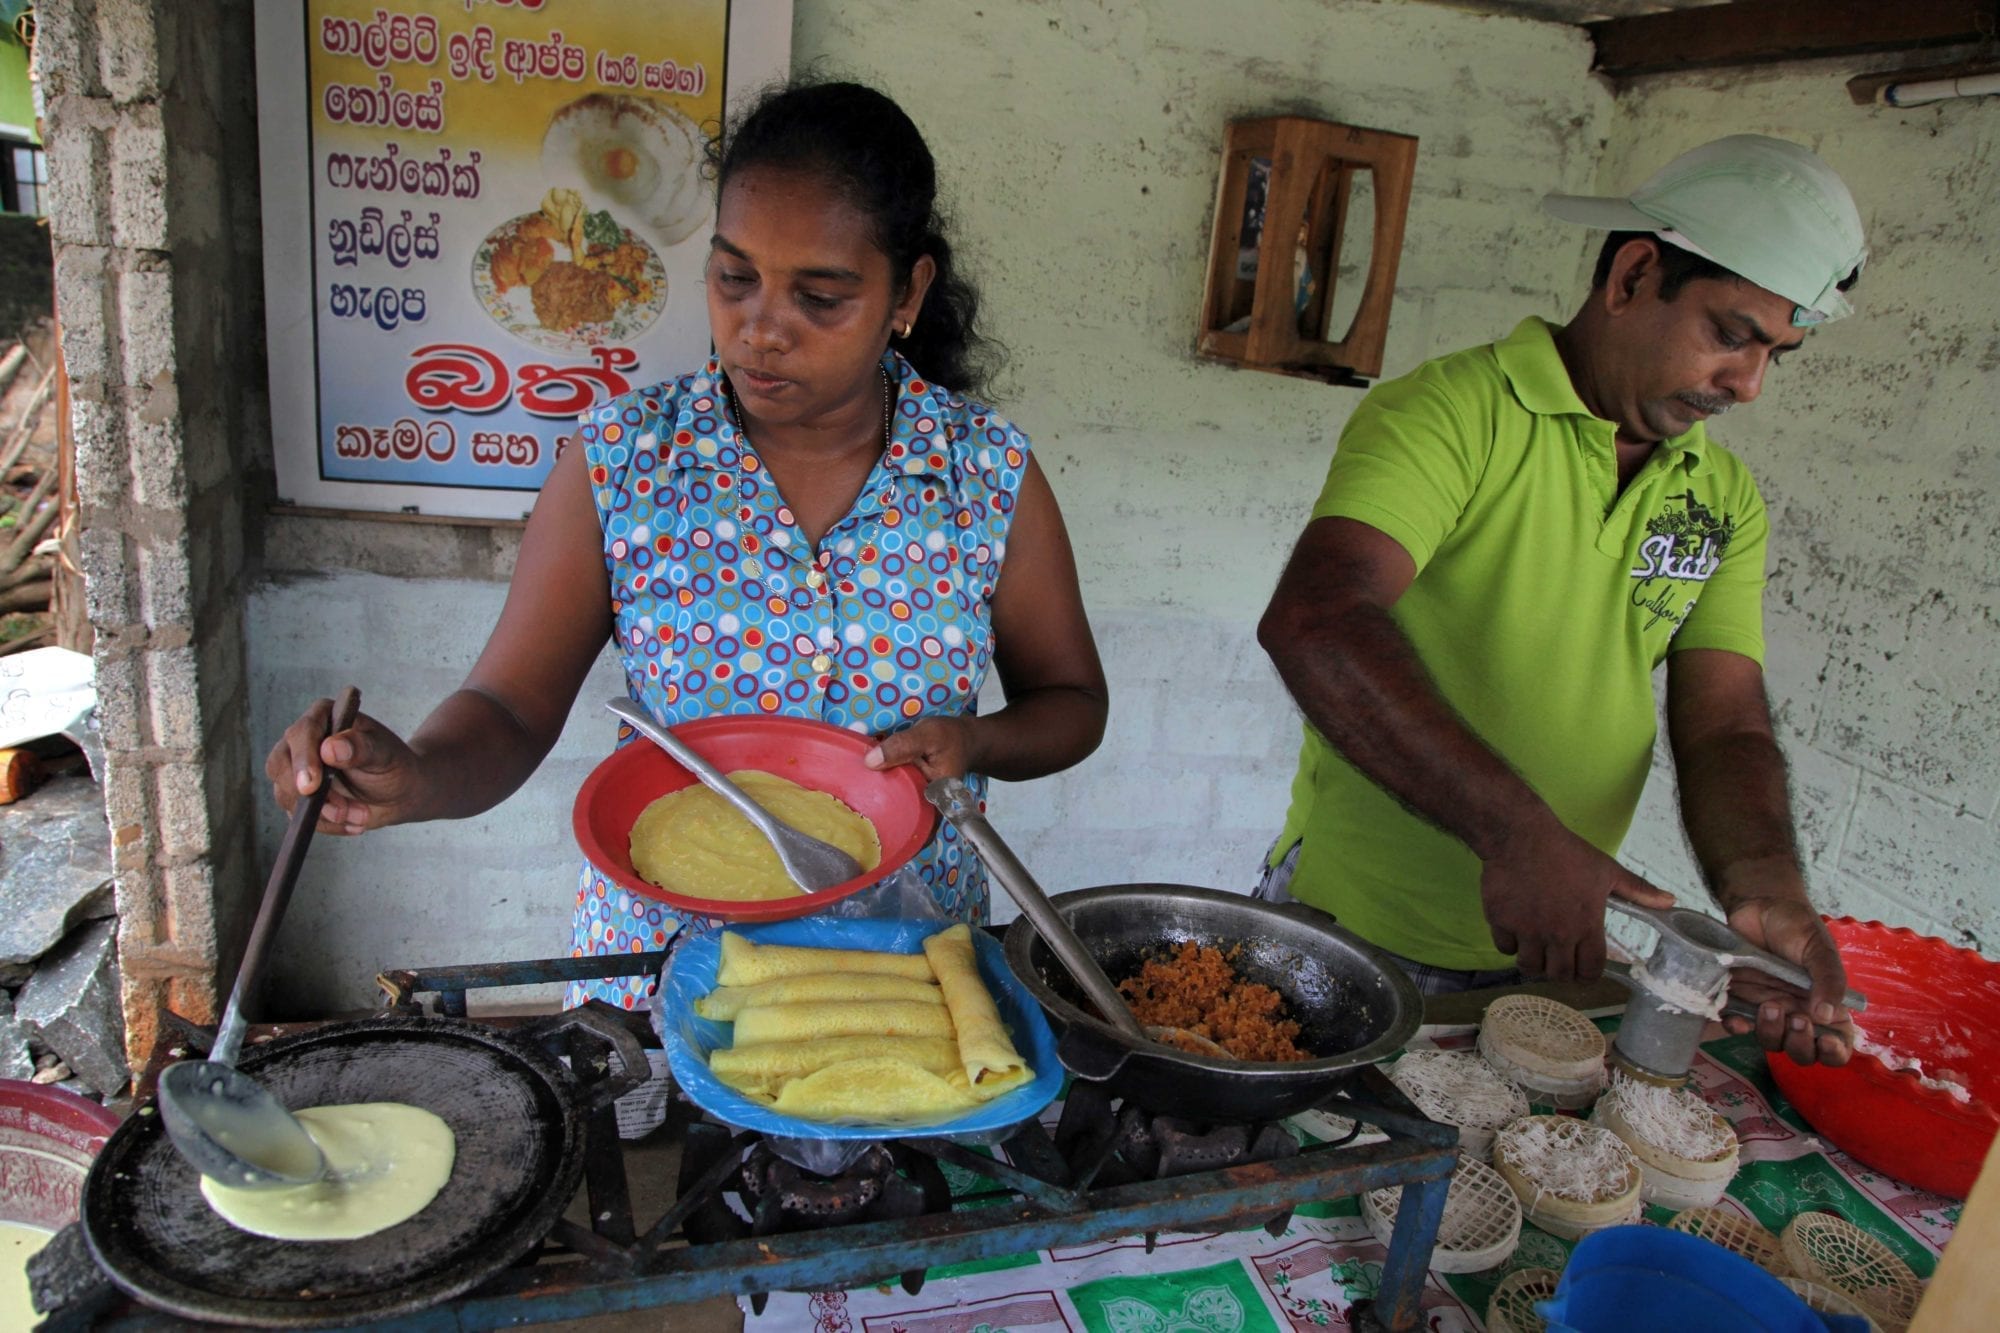 Sri Lanka, Solidarity Center, human rights, worker rights